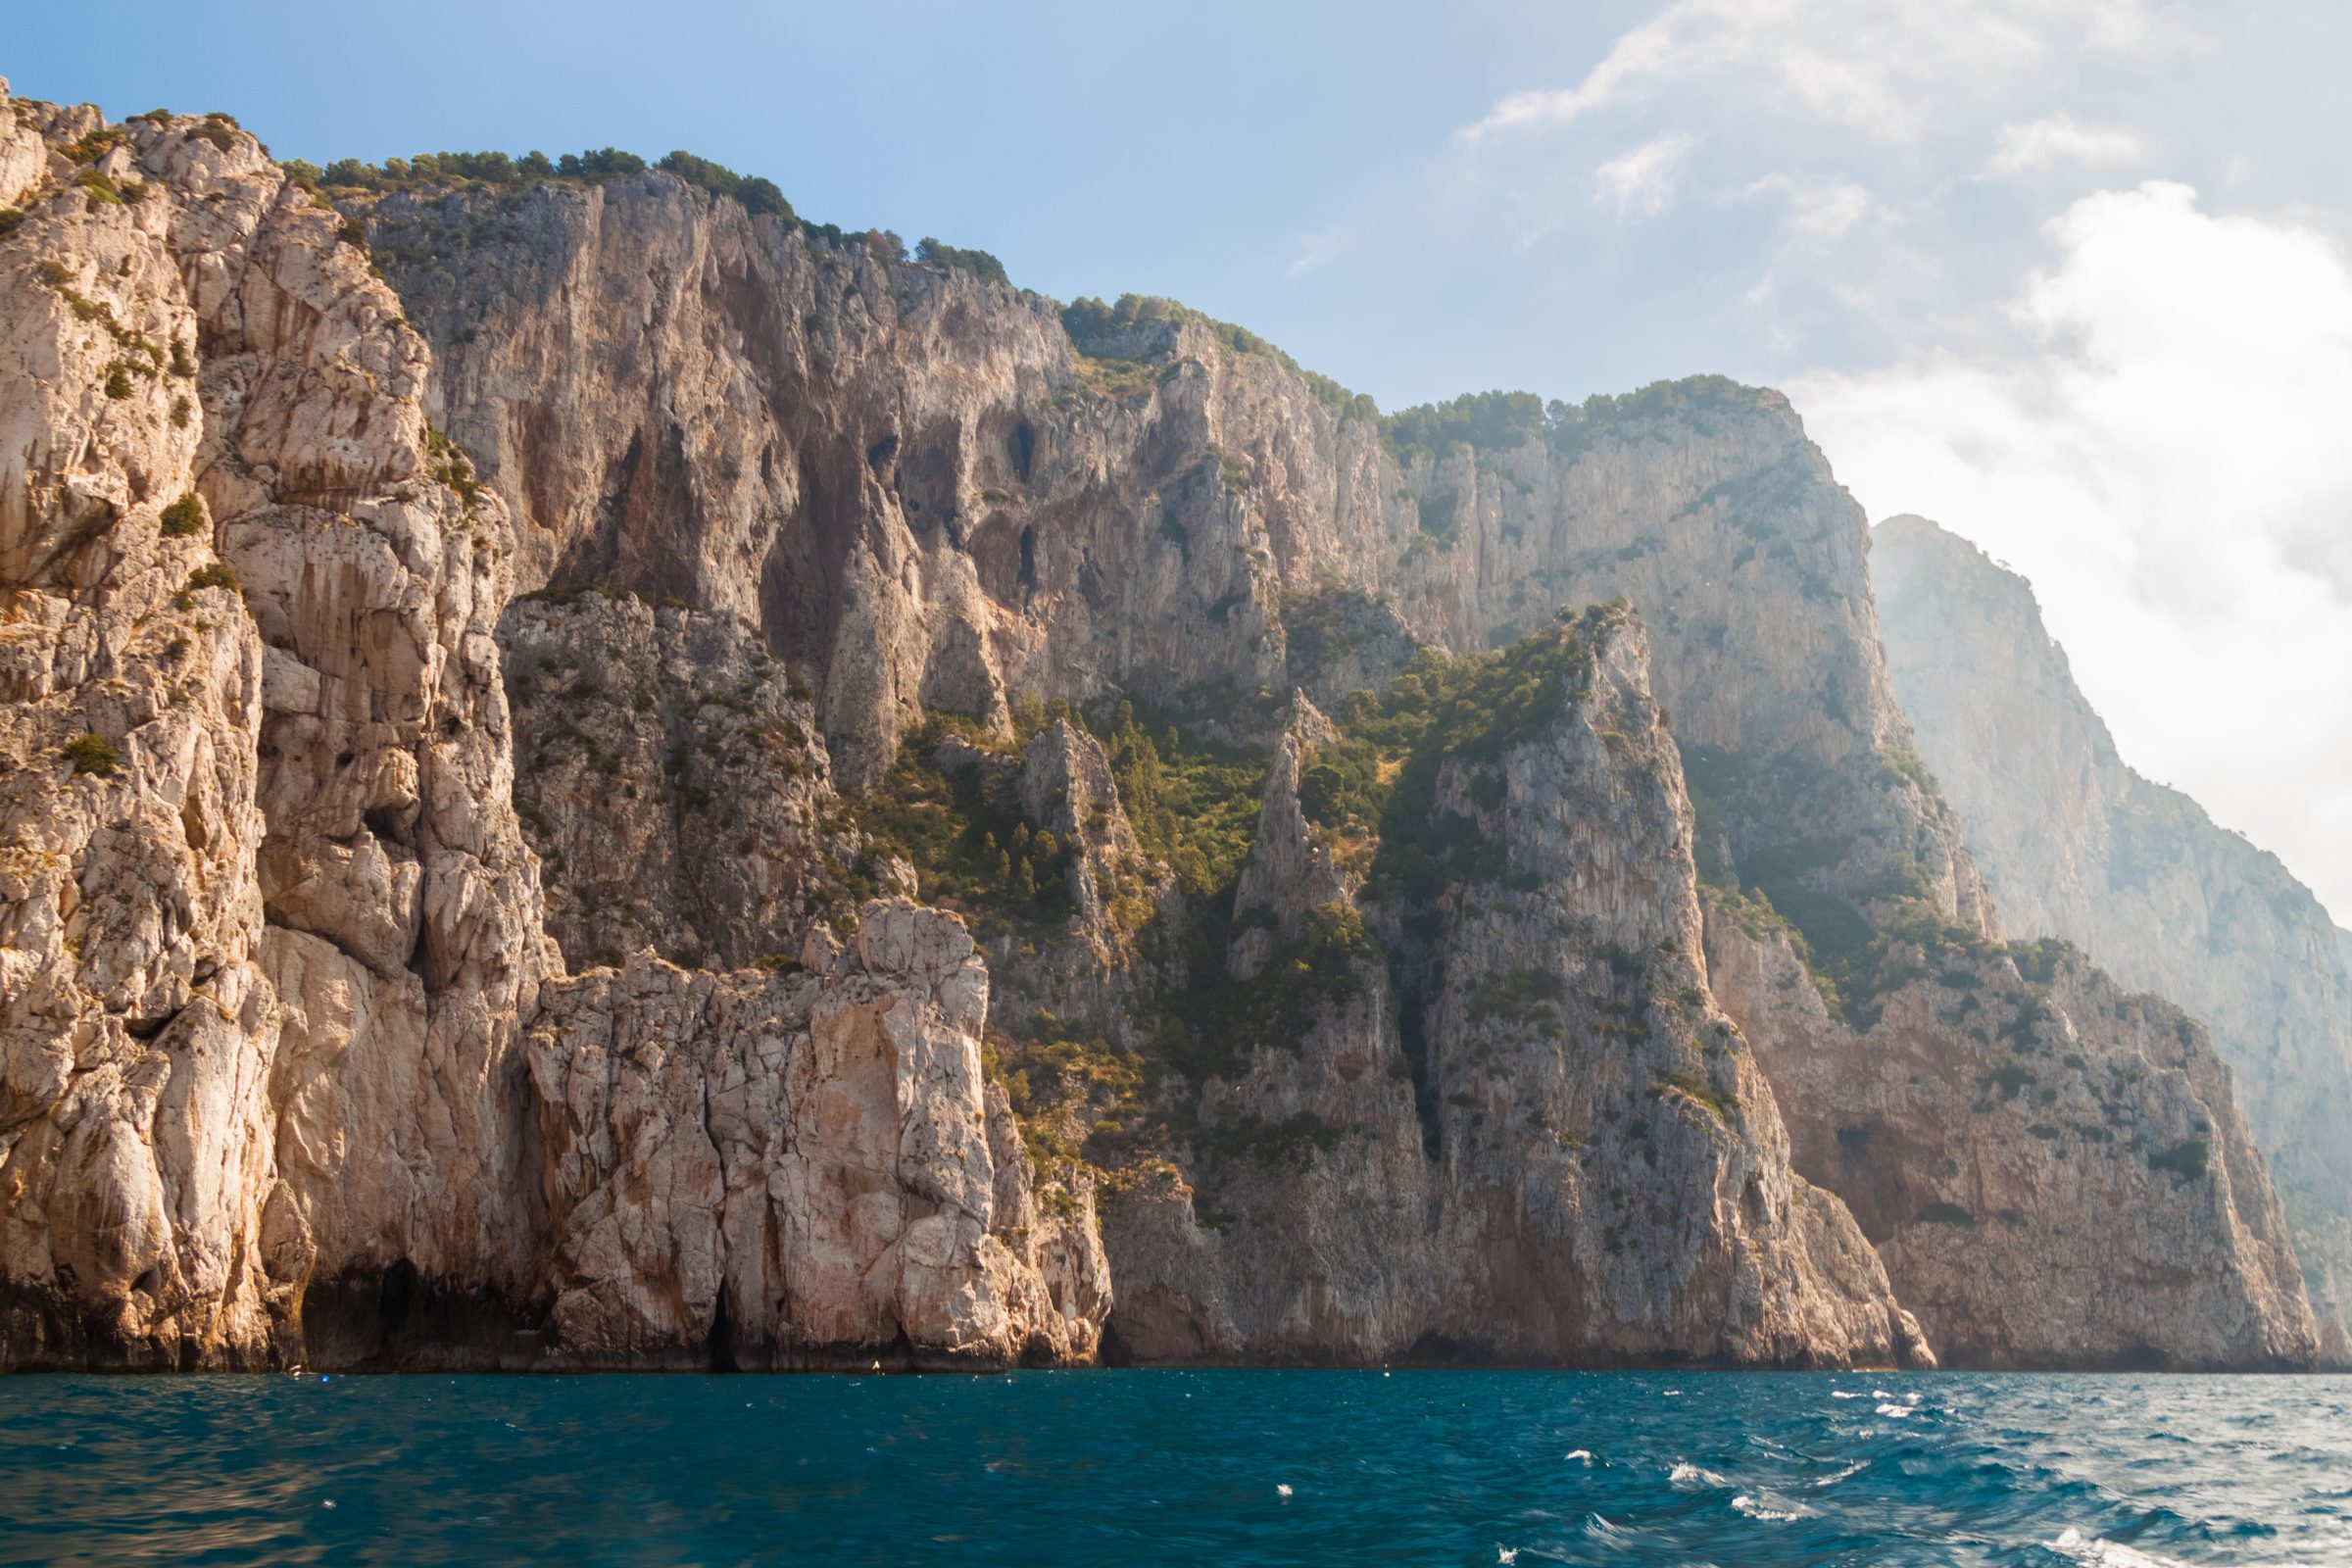 The Cliffs of Capri